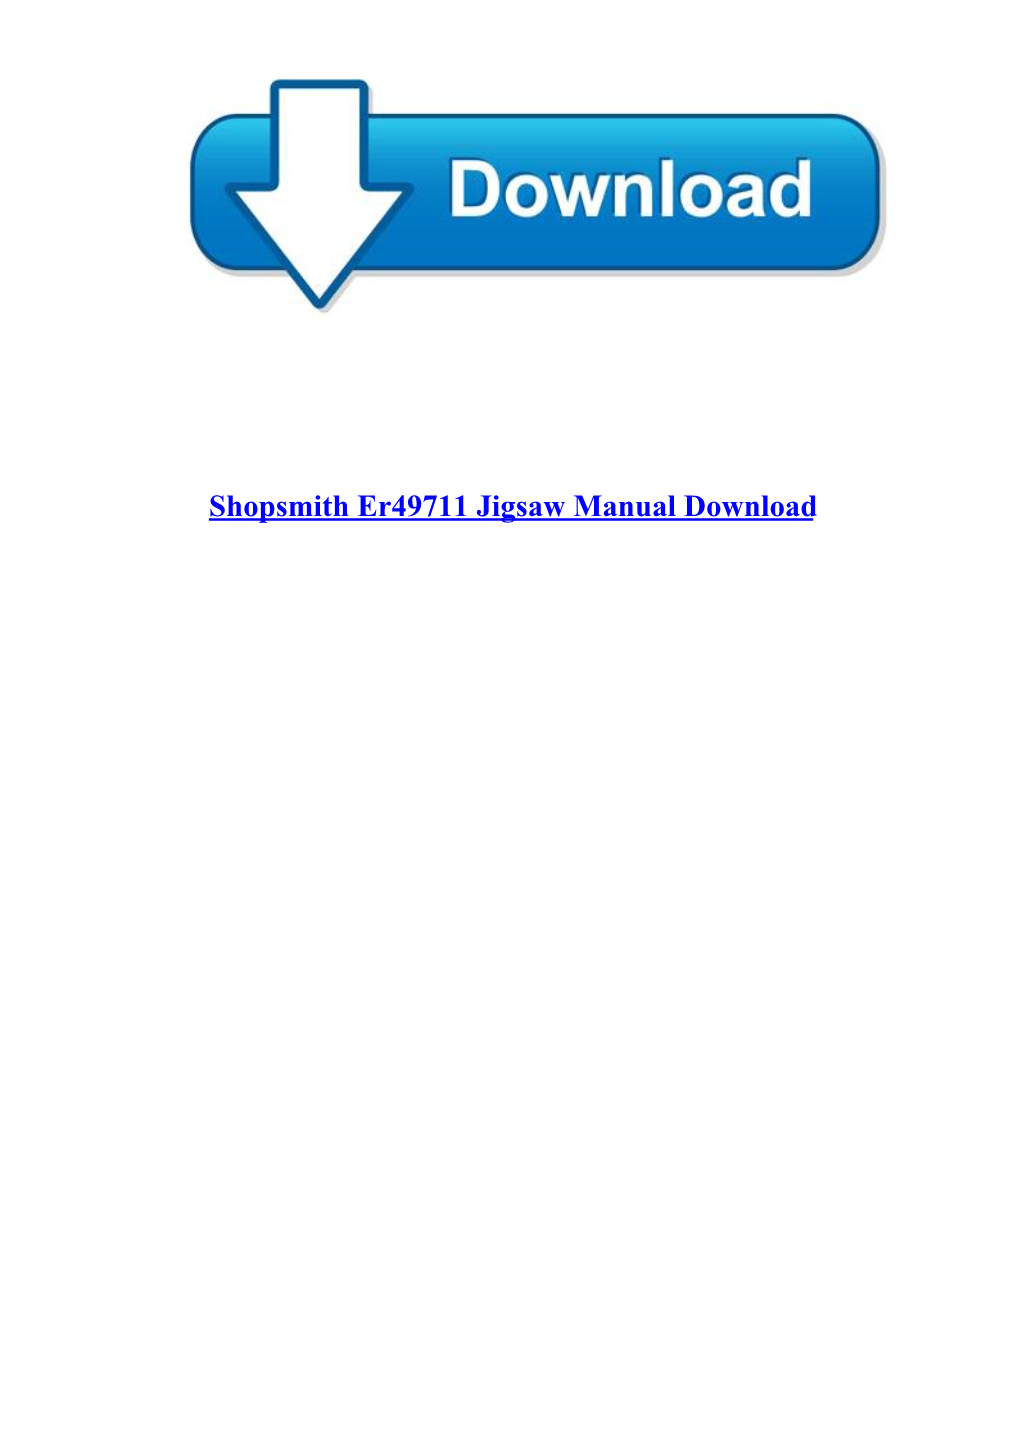 Shopsmith Er49711 Jigsaw Manual Download Shopsmith Er49711 Jigsaw Manual